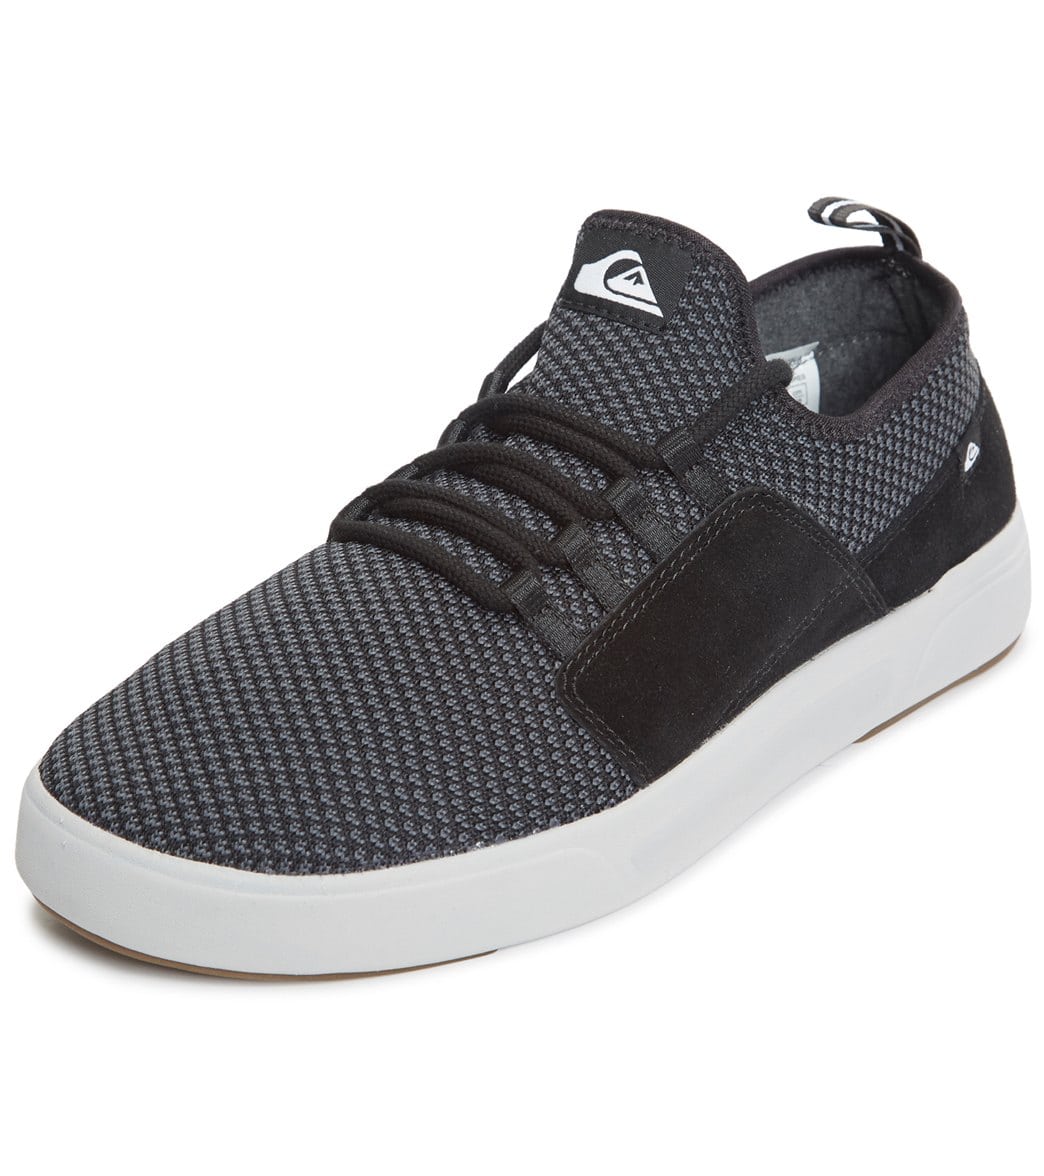 Quiksilver Winterstretch Shoe - Black/Grey/White 14 - Swimoutlet.com